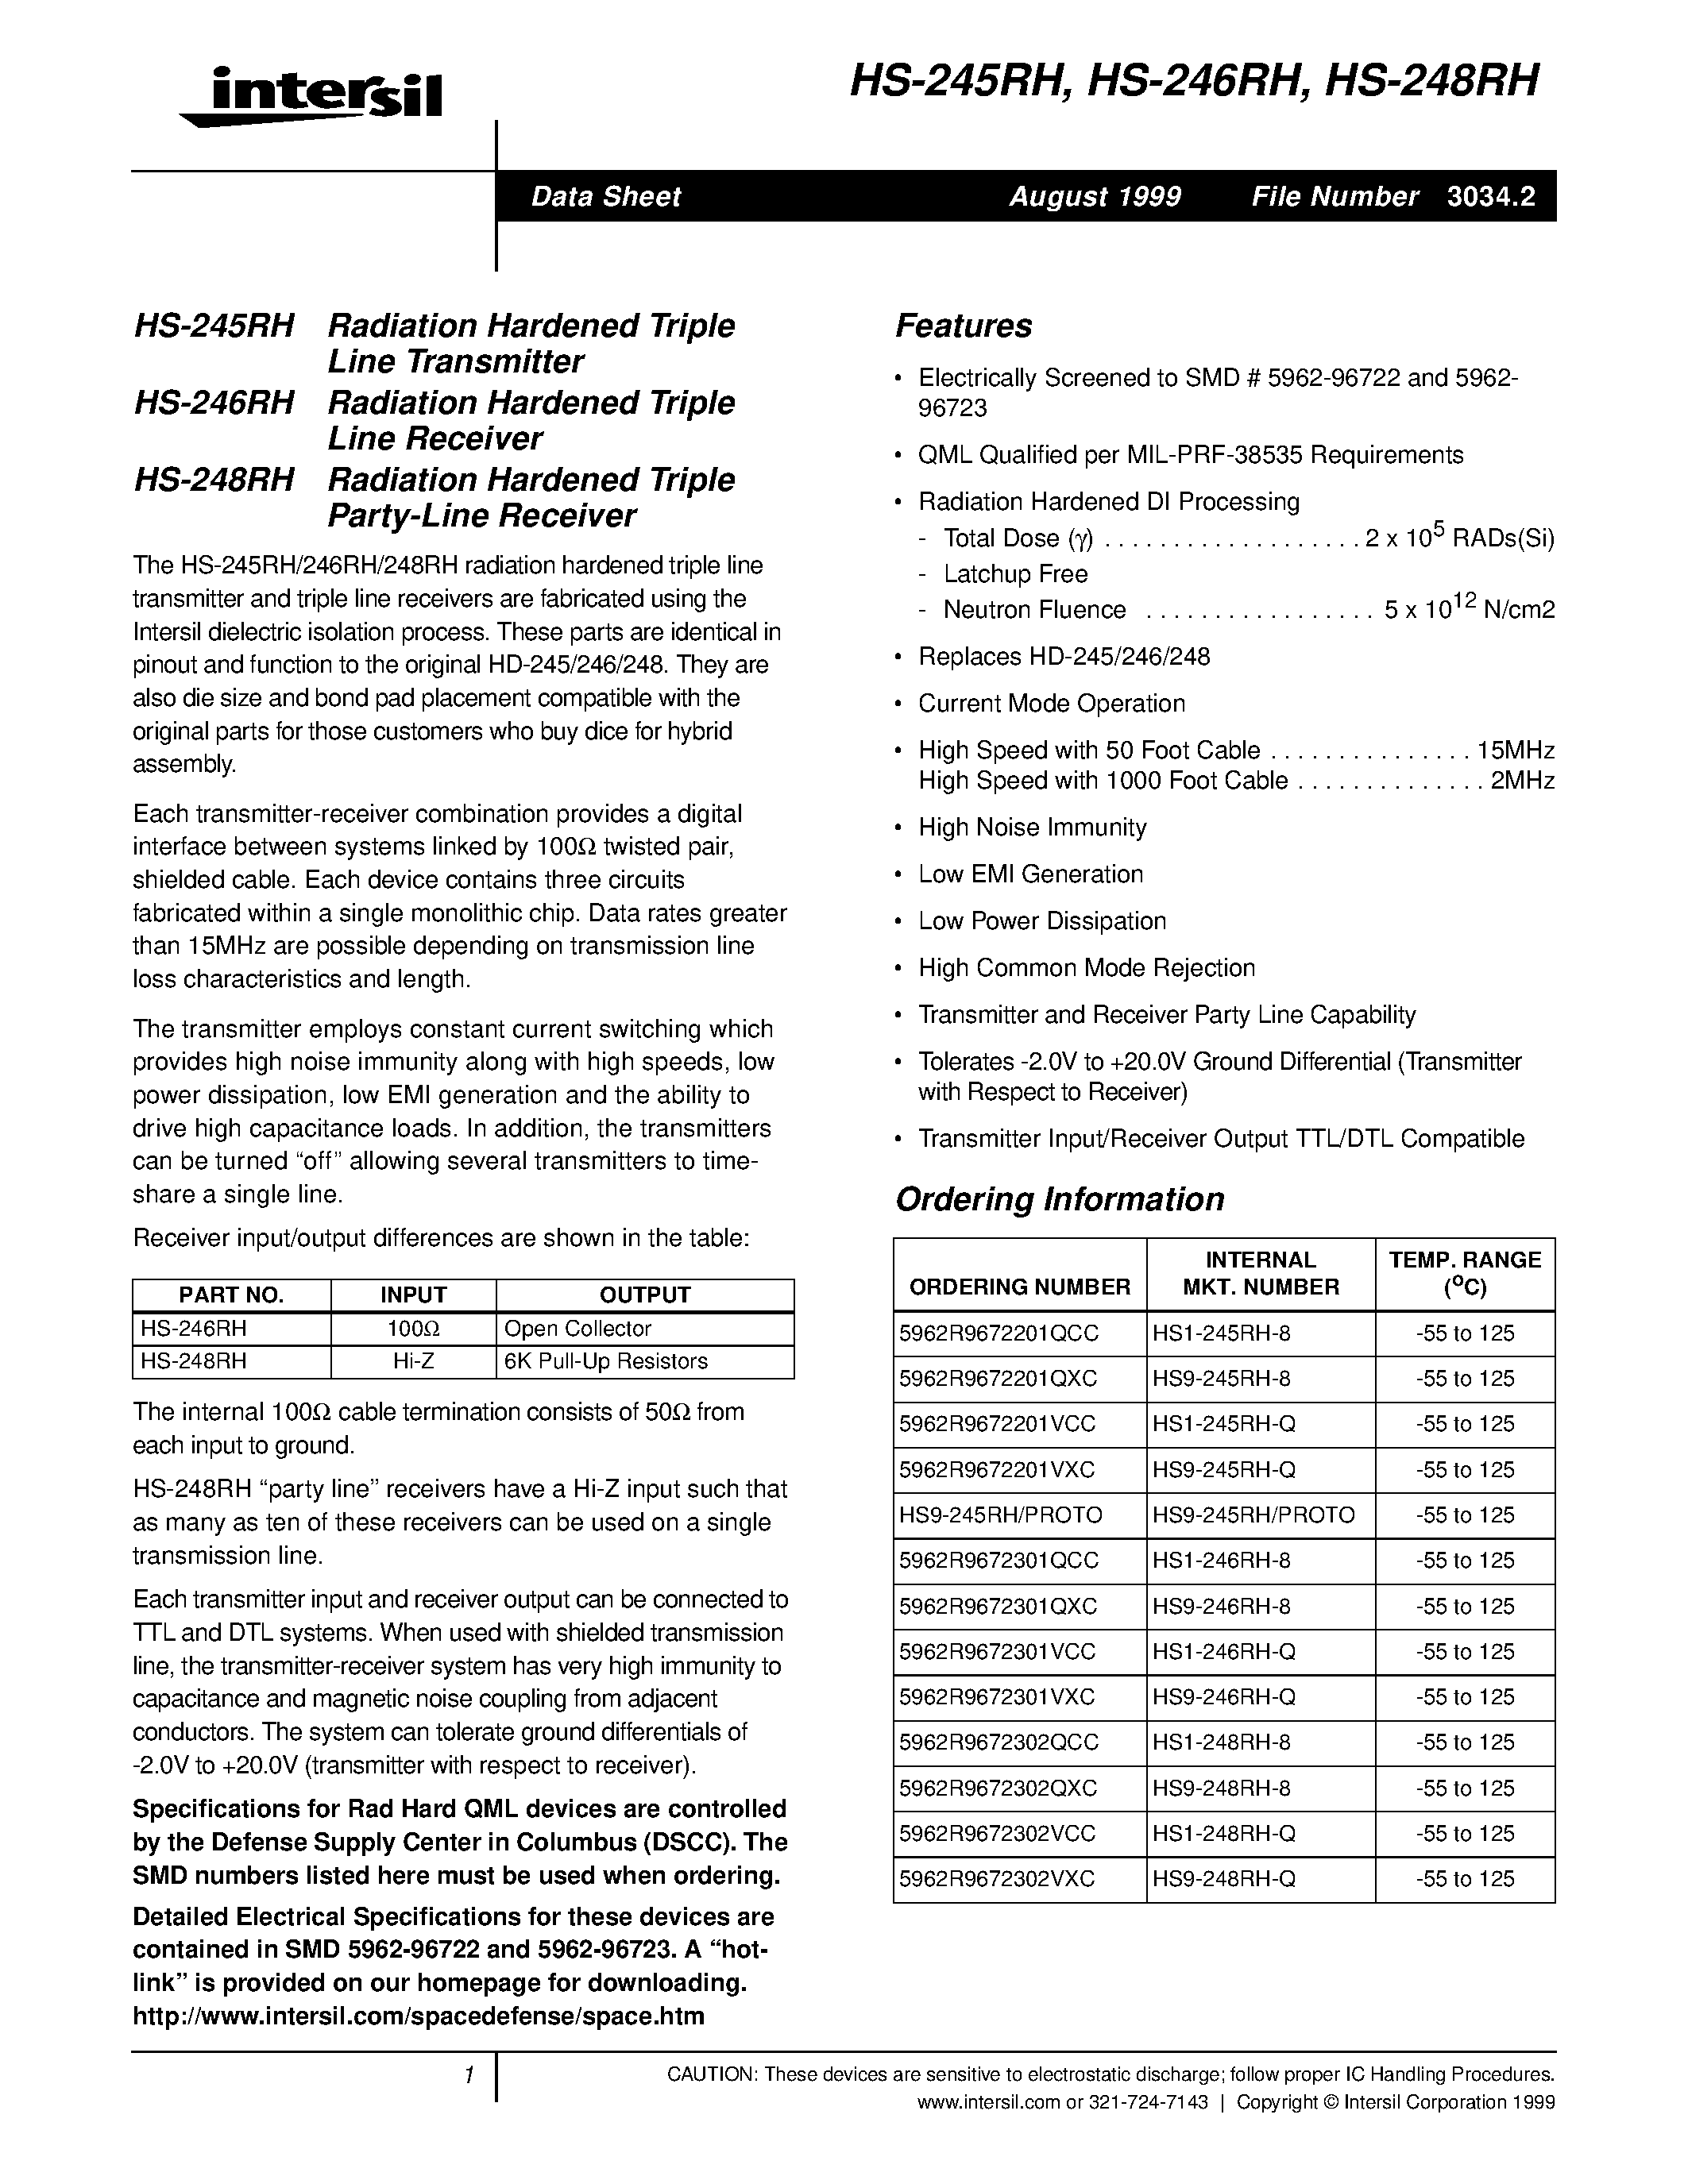 Datasheet HS9-245RH-Q - Radiation Hardened Triple Line(party-Line) Transmitter page 1